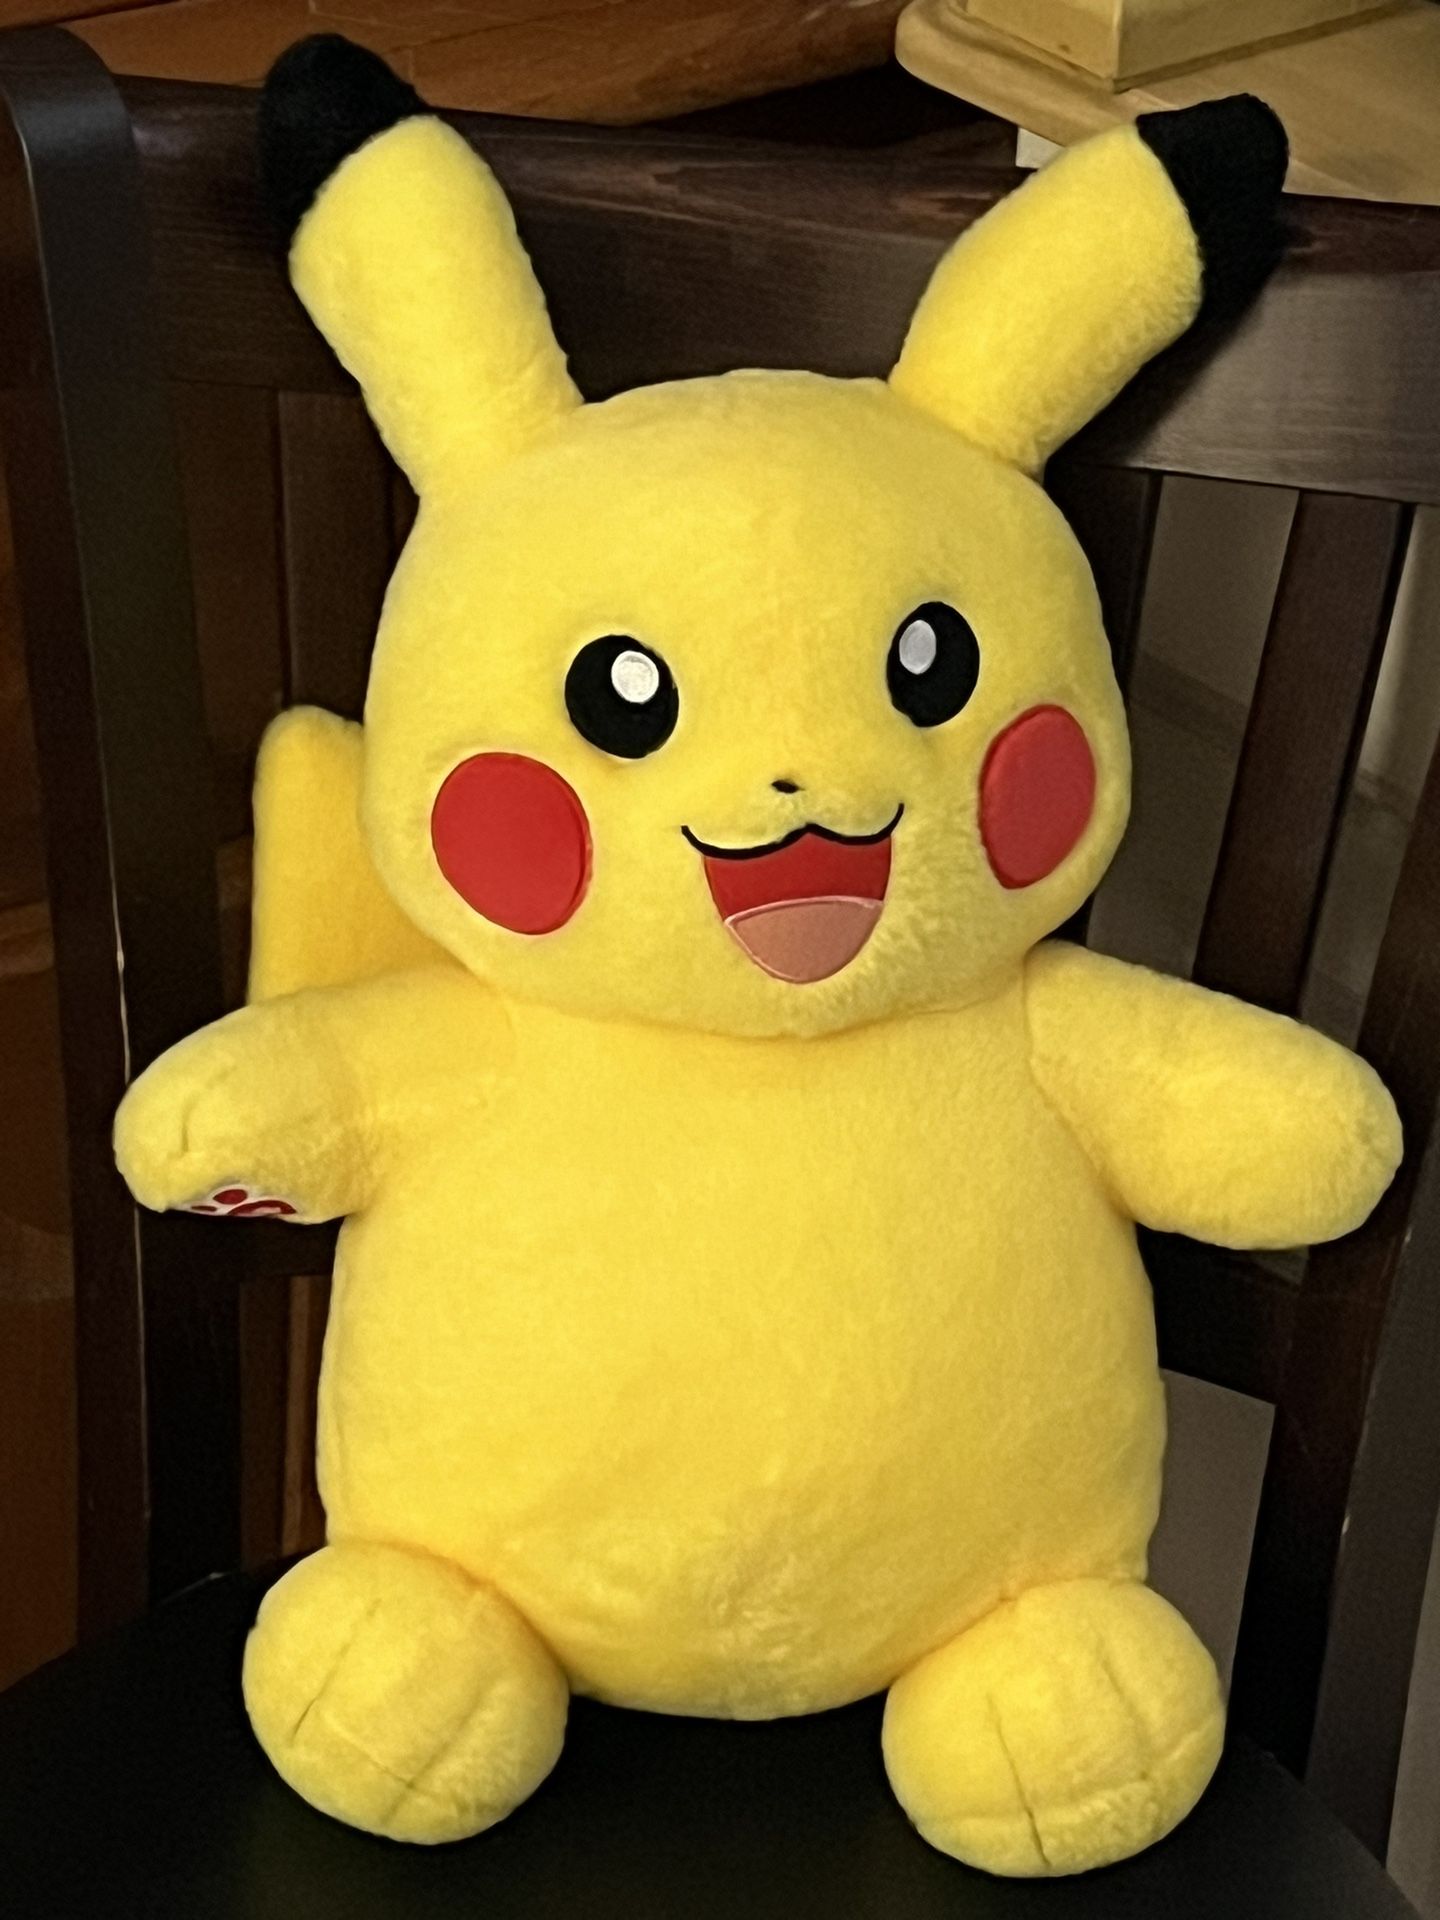 Pikachu Plushie - $15